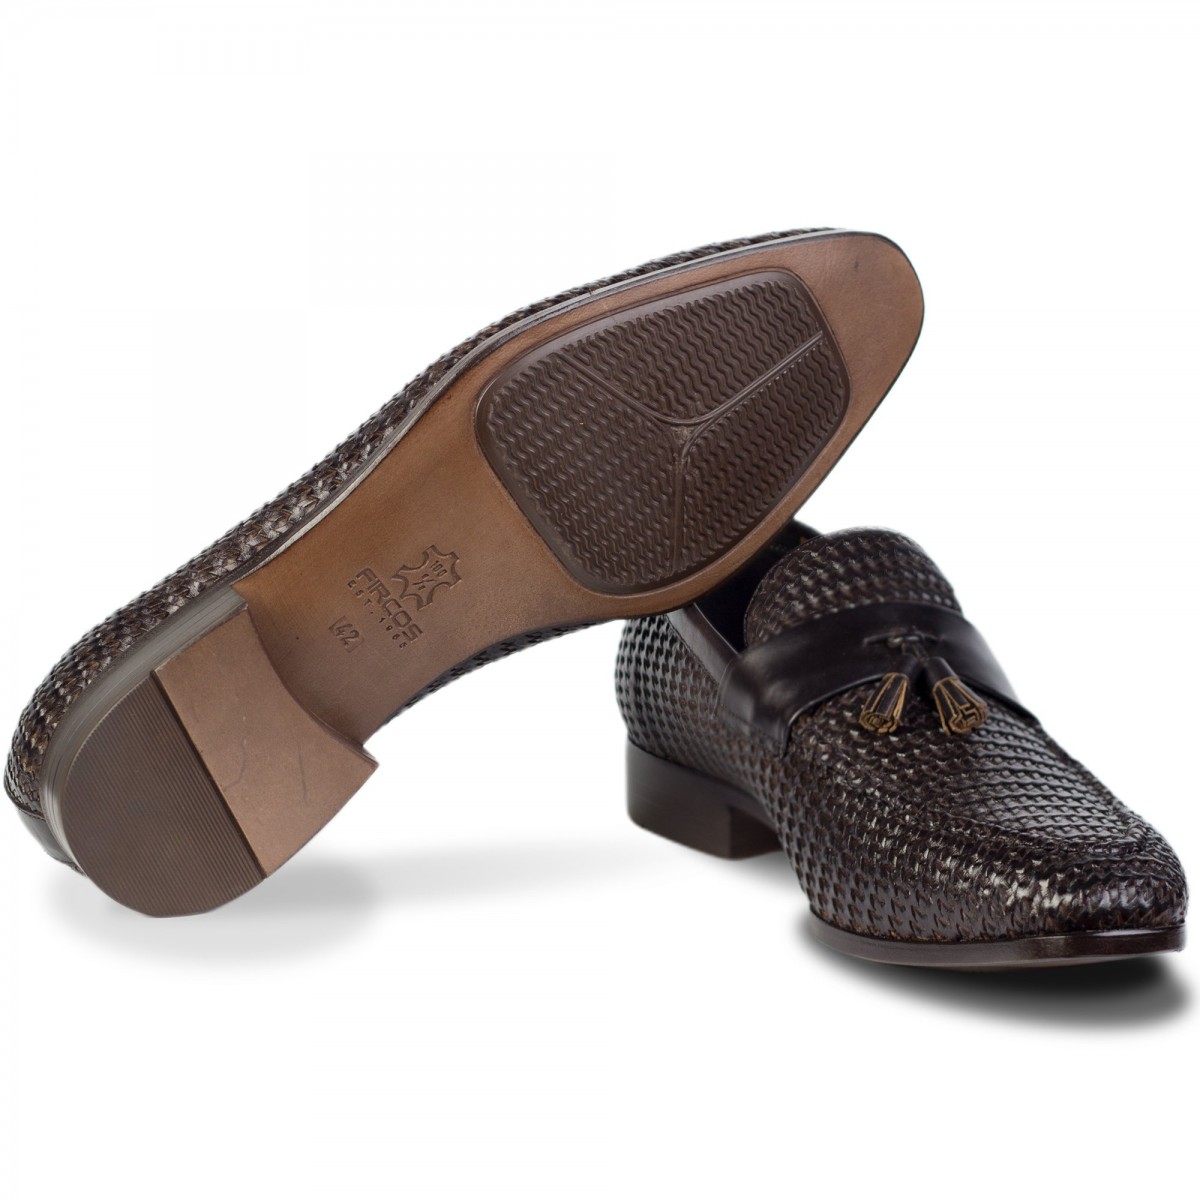 METRO Da Vinchi Slip On Shoes For Men  Buy 23 Tan Color METRO Da Vinchi  Slip On Shoes For Men Online at Best Price  Shop Online for Footwears in  India  Flipkartcom